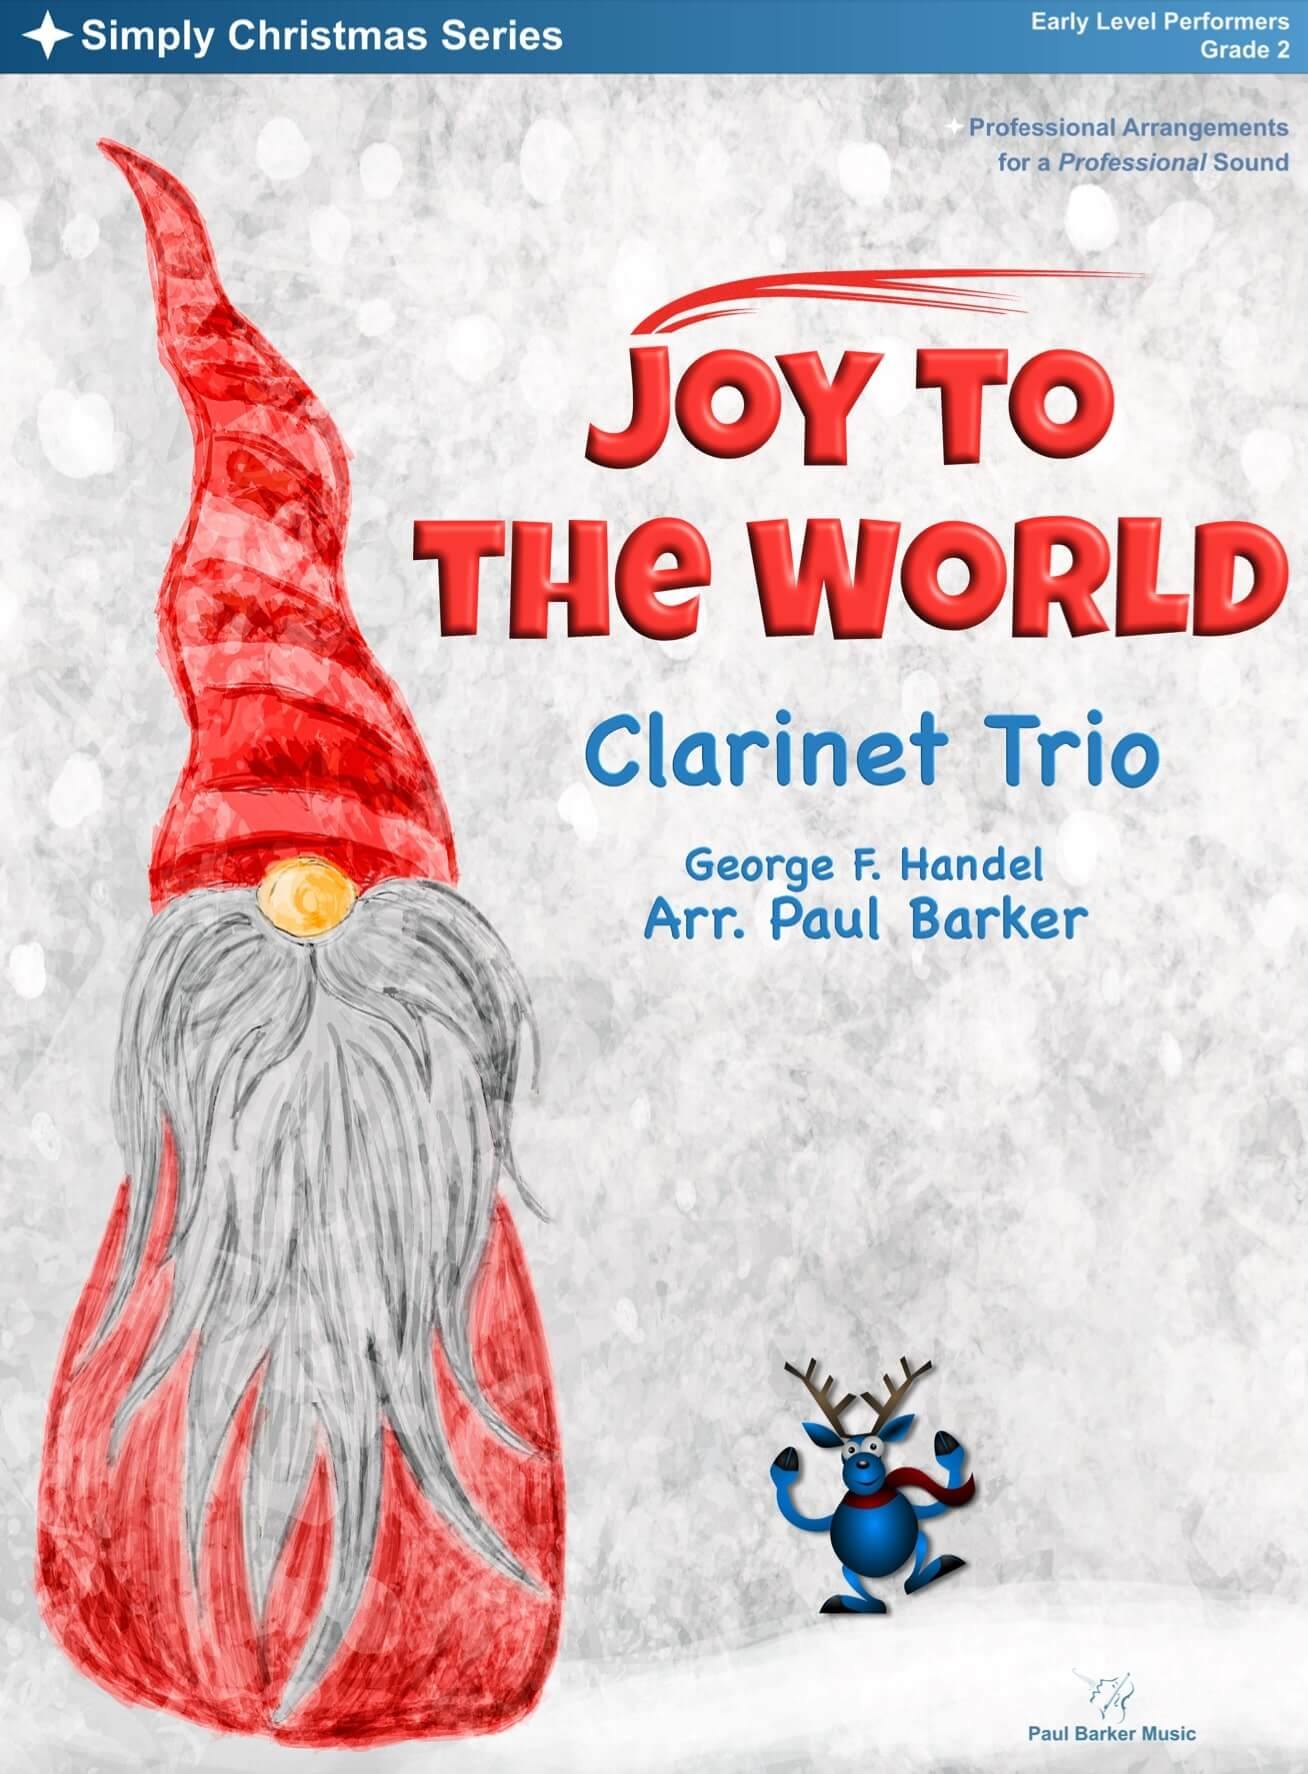 Joy To The World (Clarinet Trio) - Paul Barker Music 